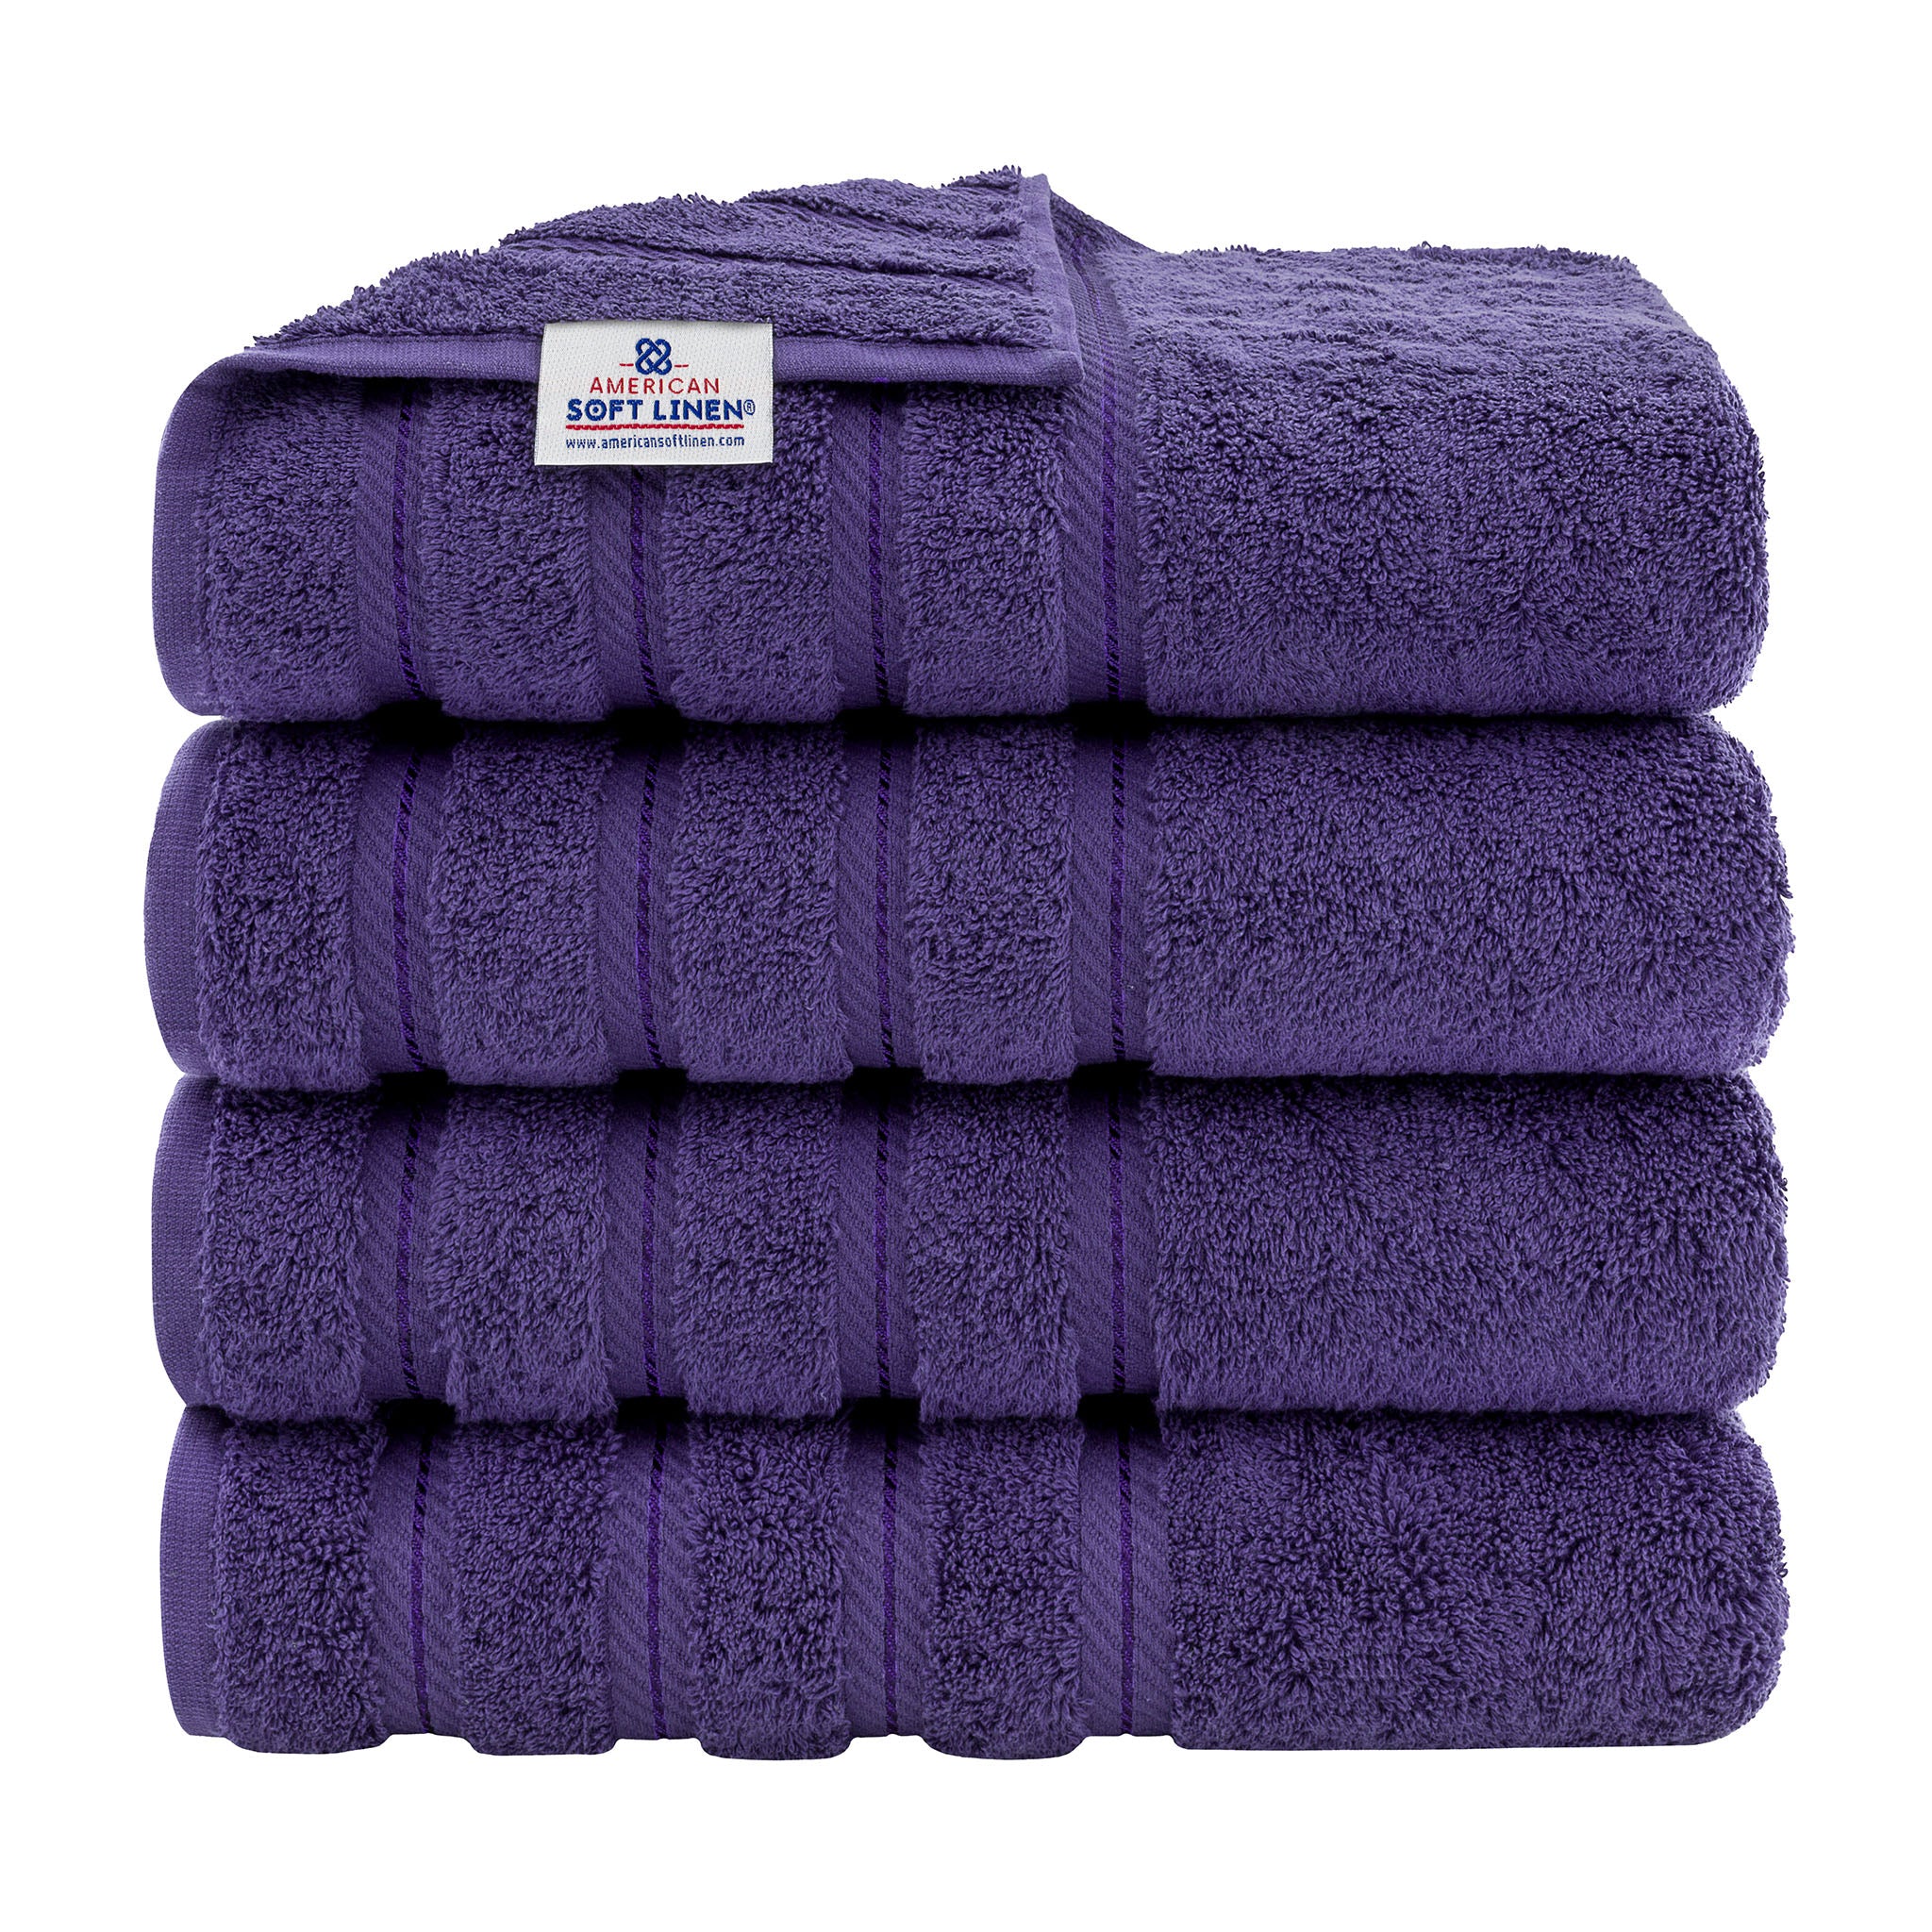 American Soft Linen 100% Turkish Cotton 4 Pack Bath Towel Set purple-1